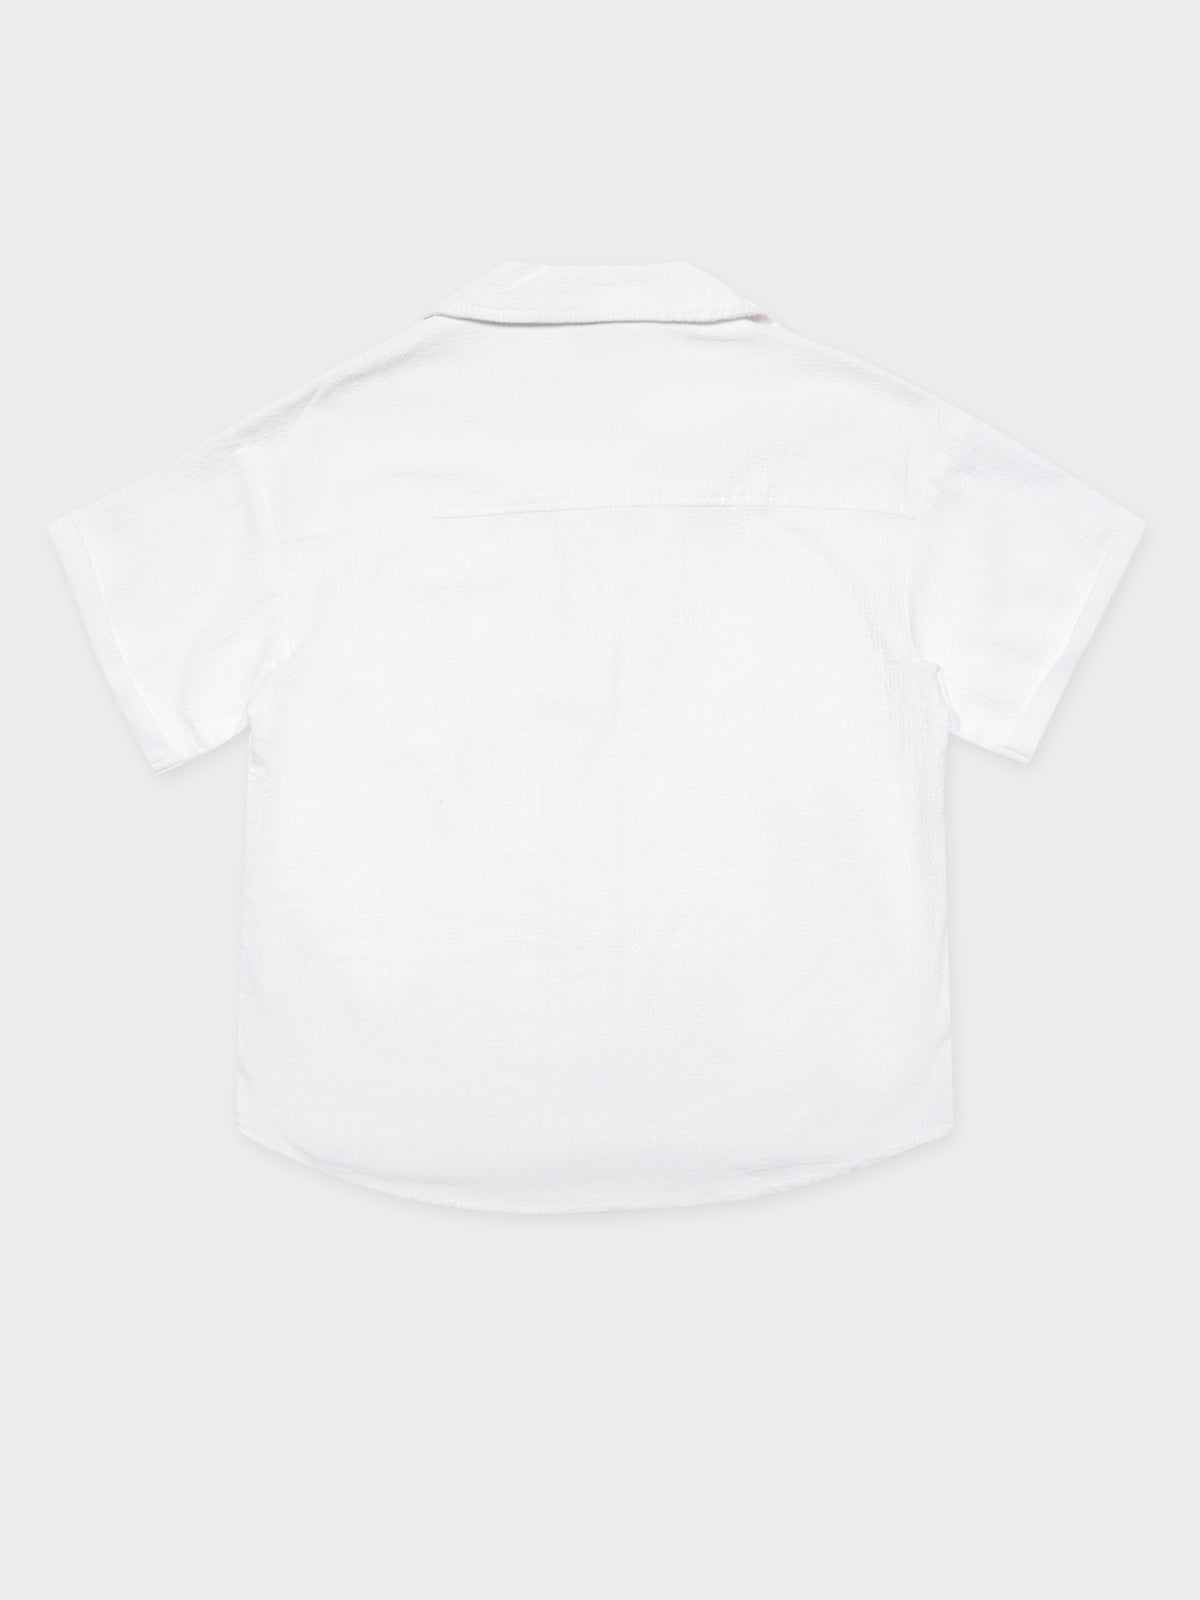 Vermont Oversized Shirt in White